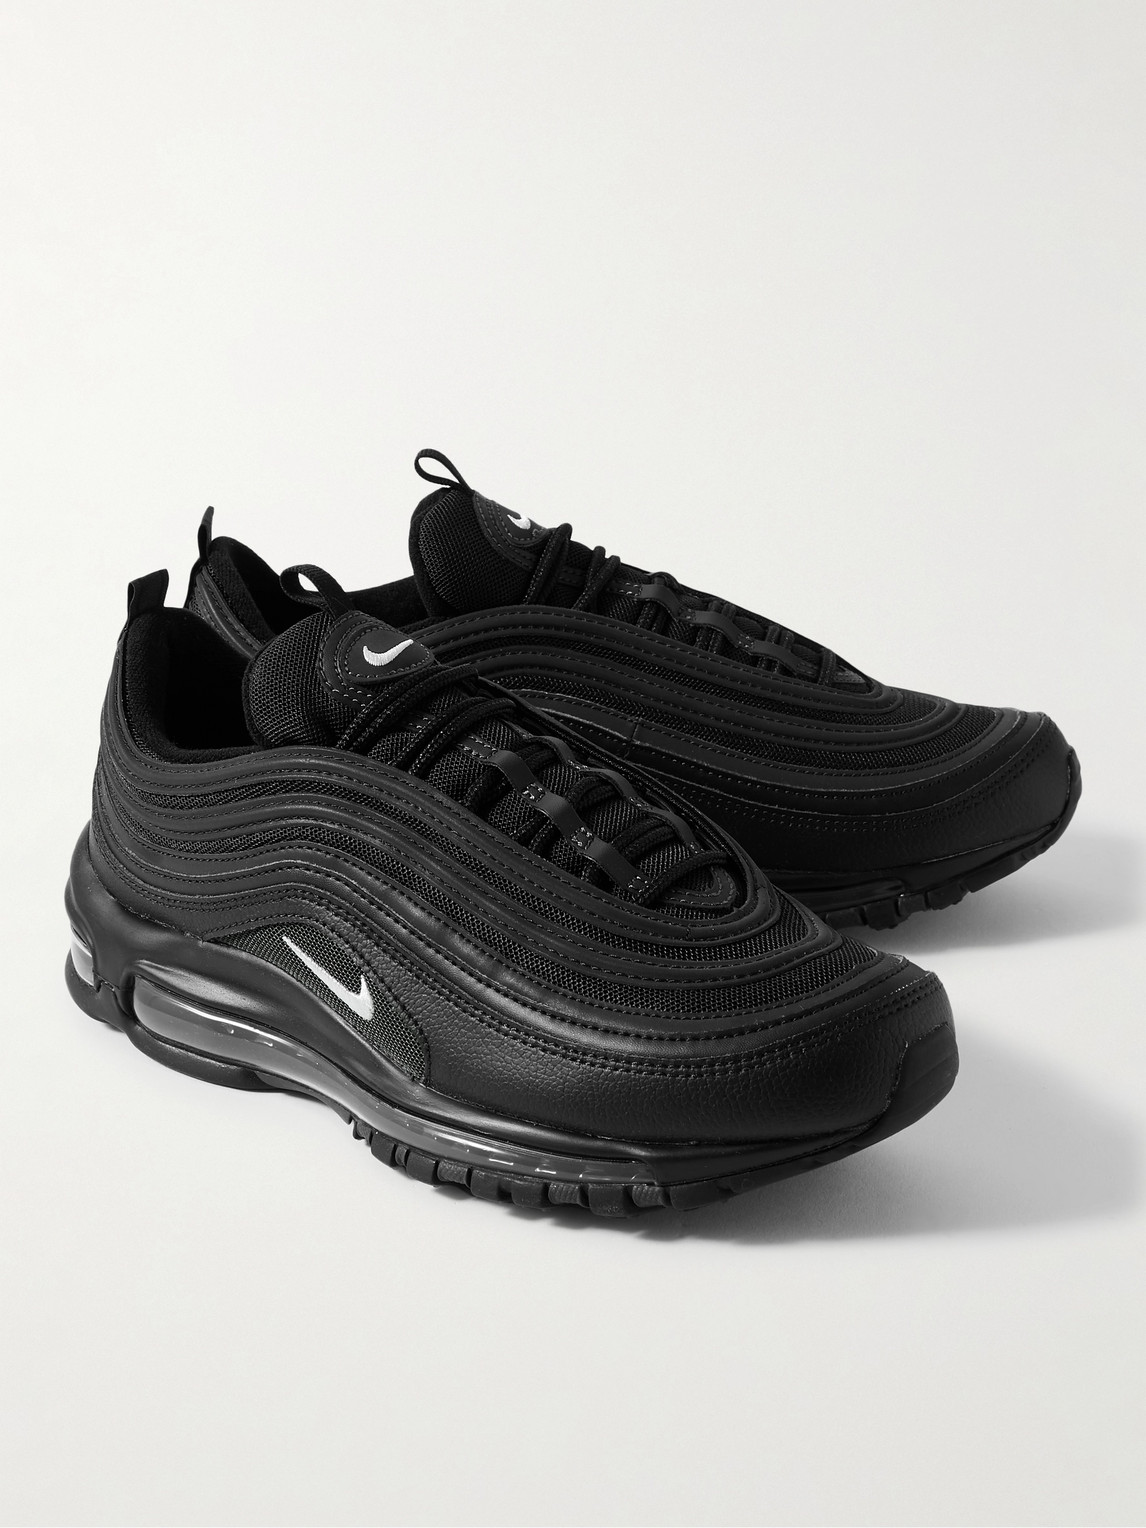 Nike Air Max 97 Sneaker In Black/white/anthracite | ModeSens